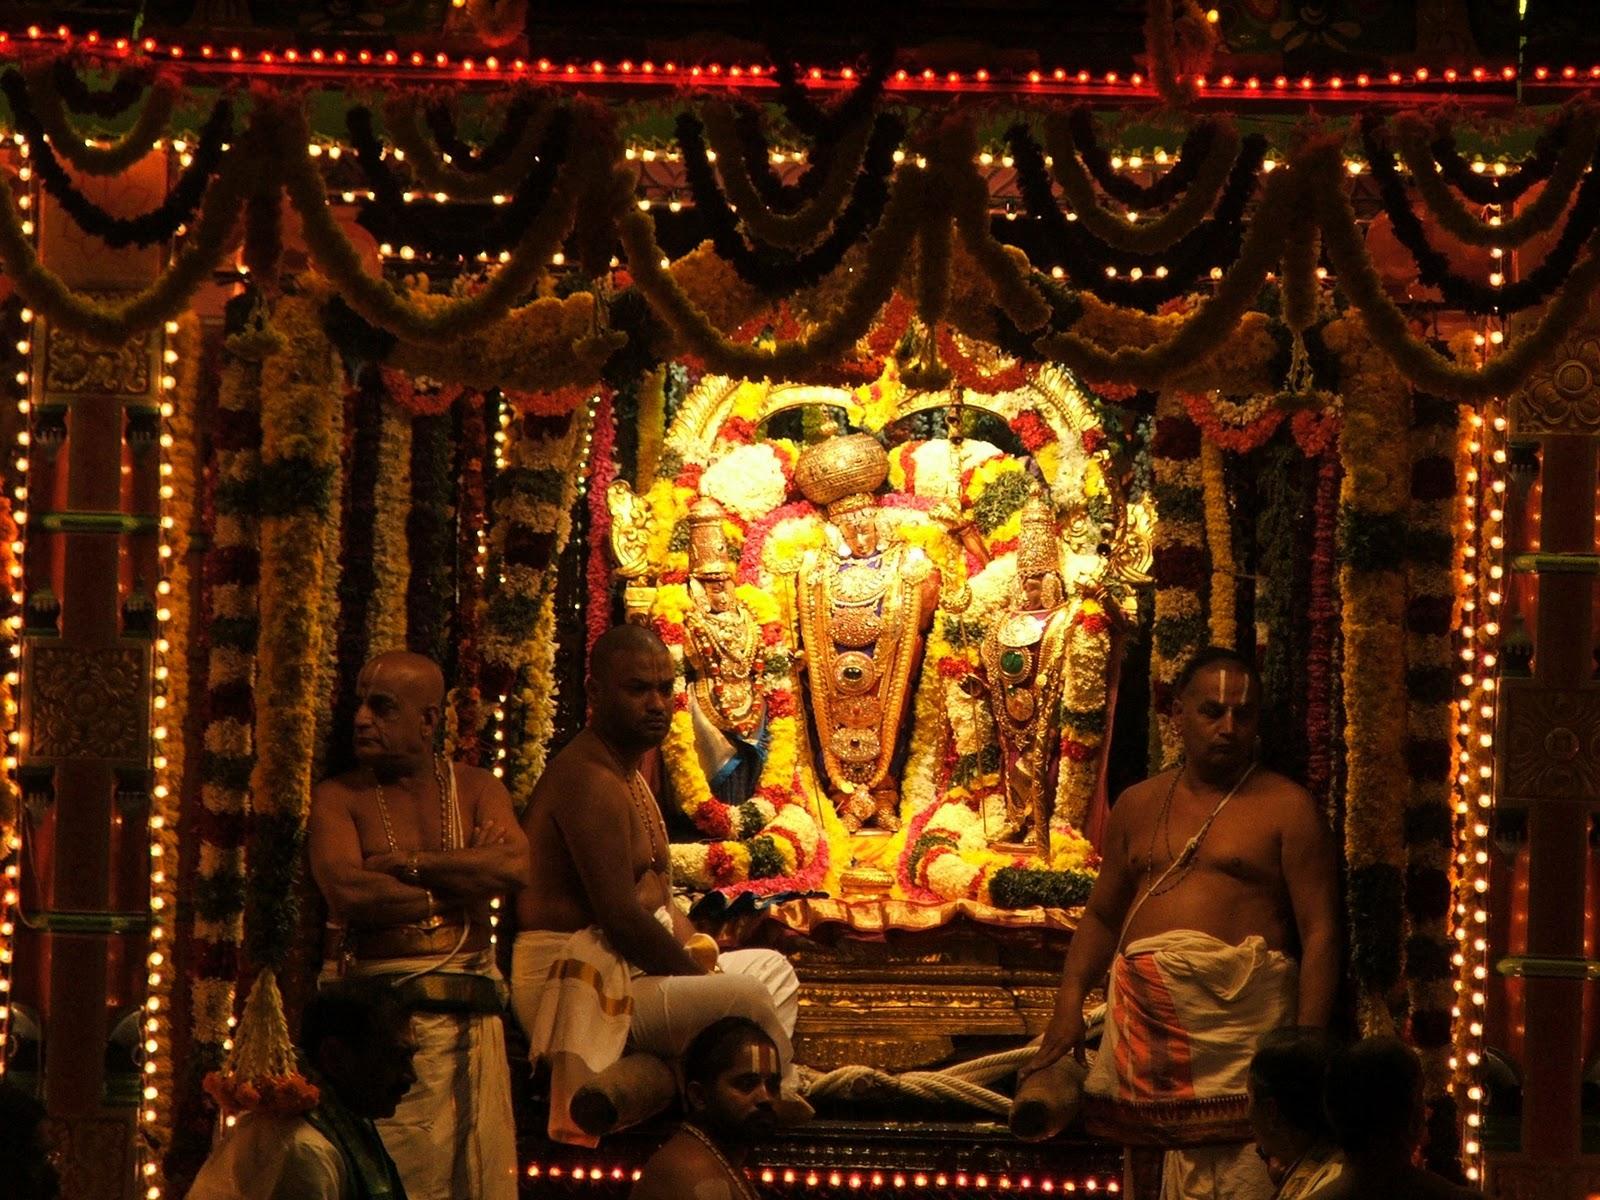 Rare Photo of Balaji from Lord Sri Venkateswara temple at Tirupati